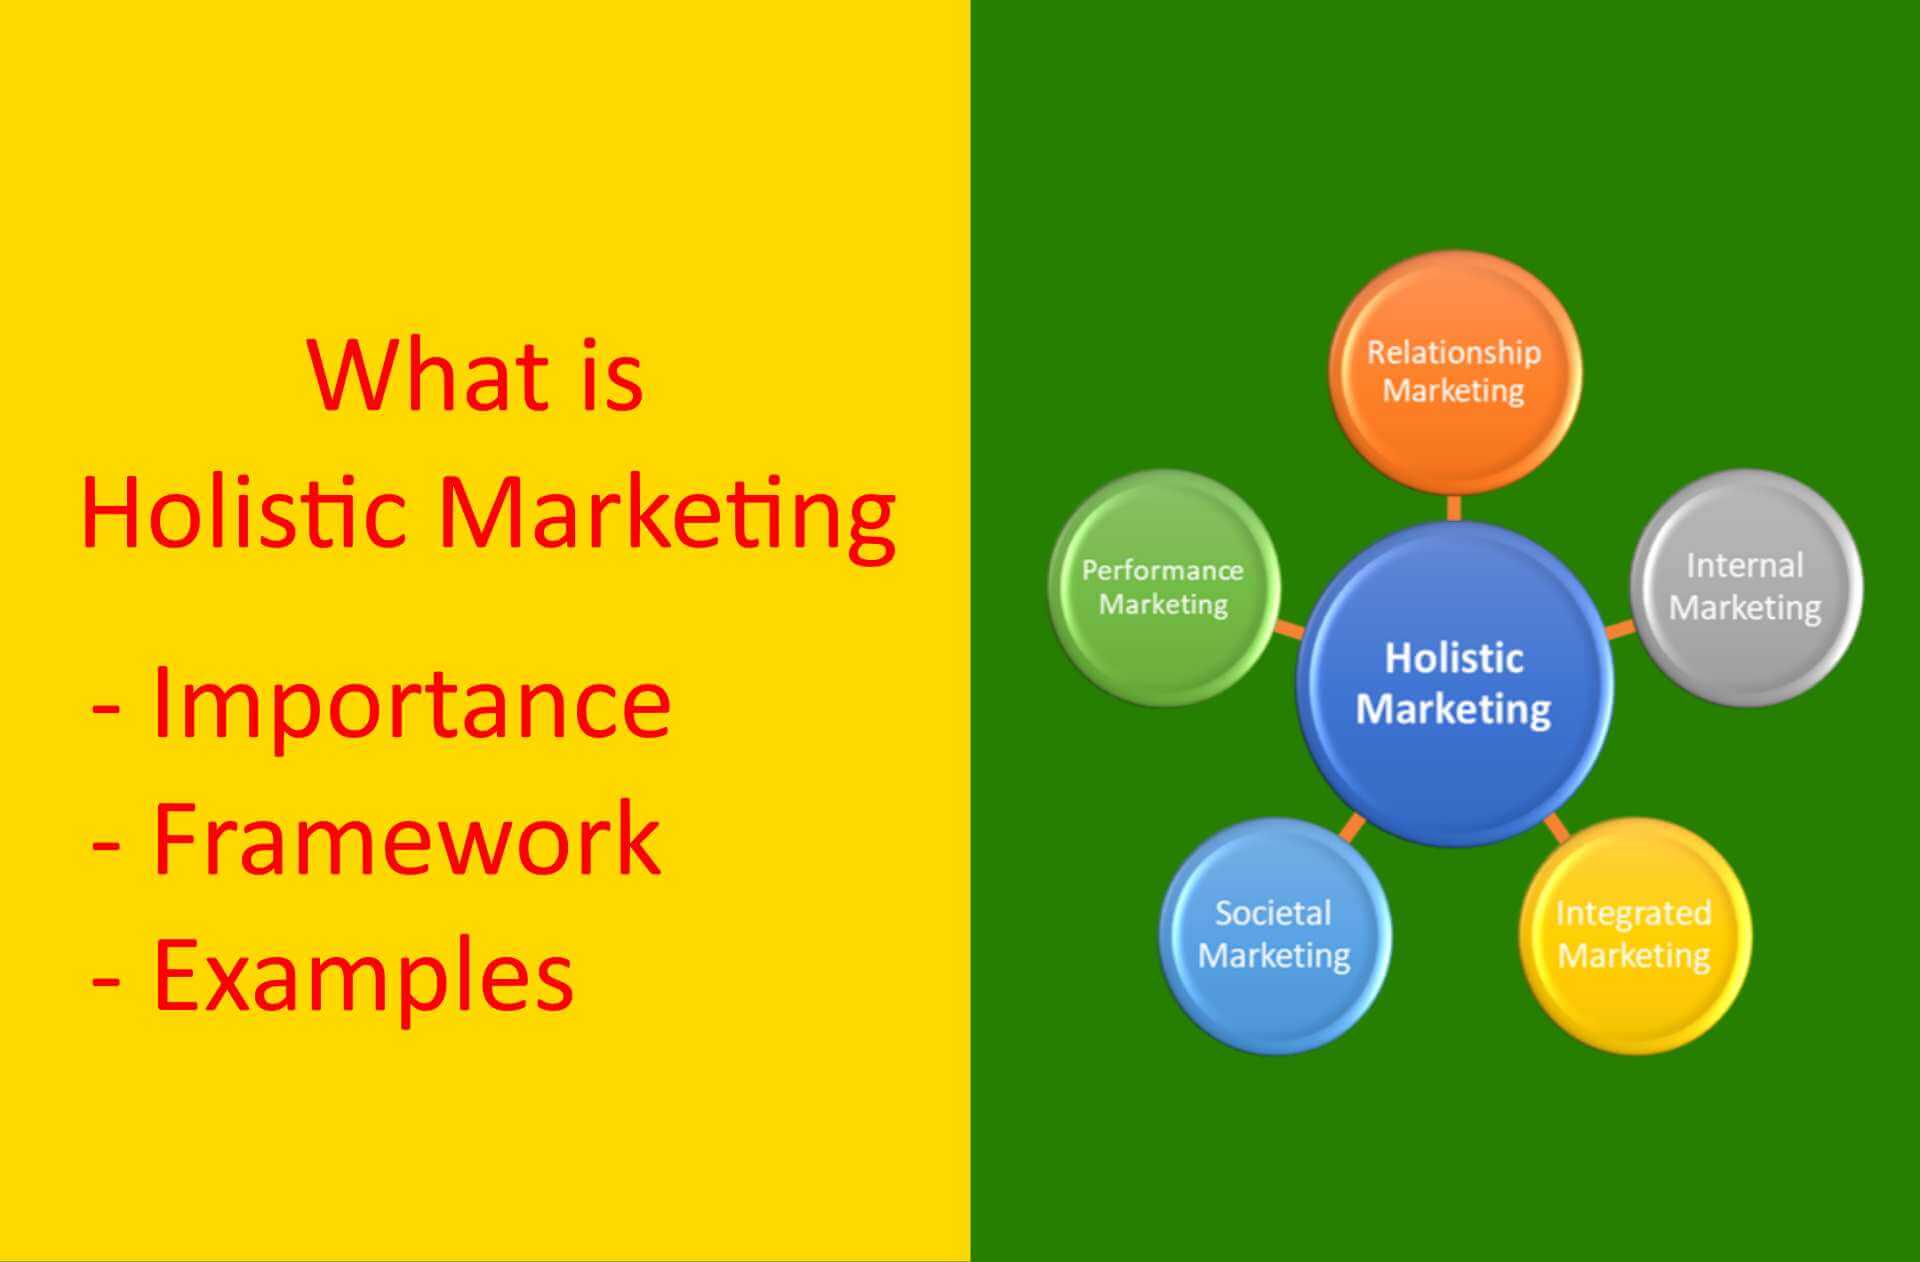 How to create a holistic marketing approach